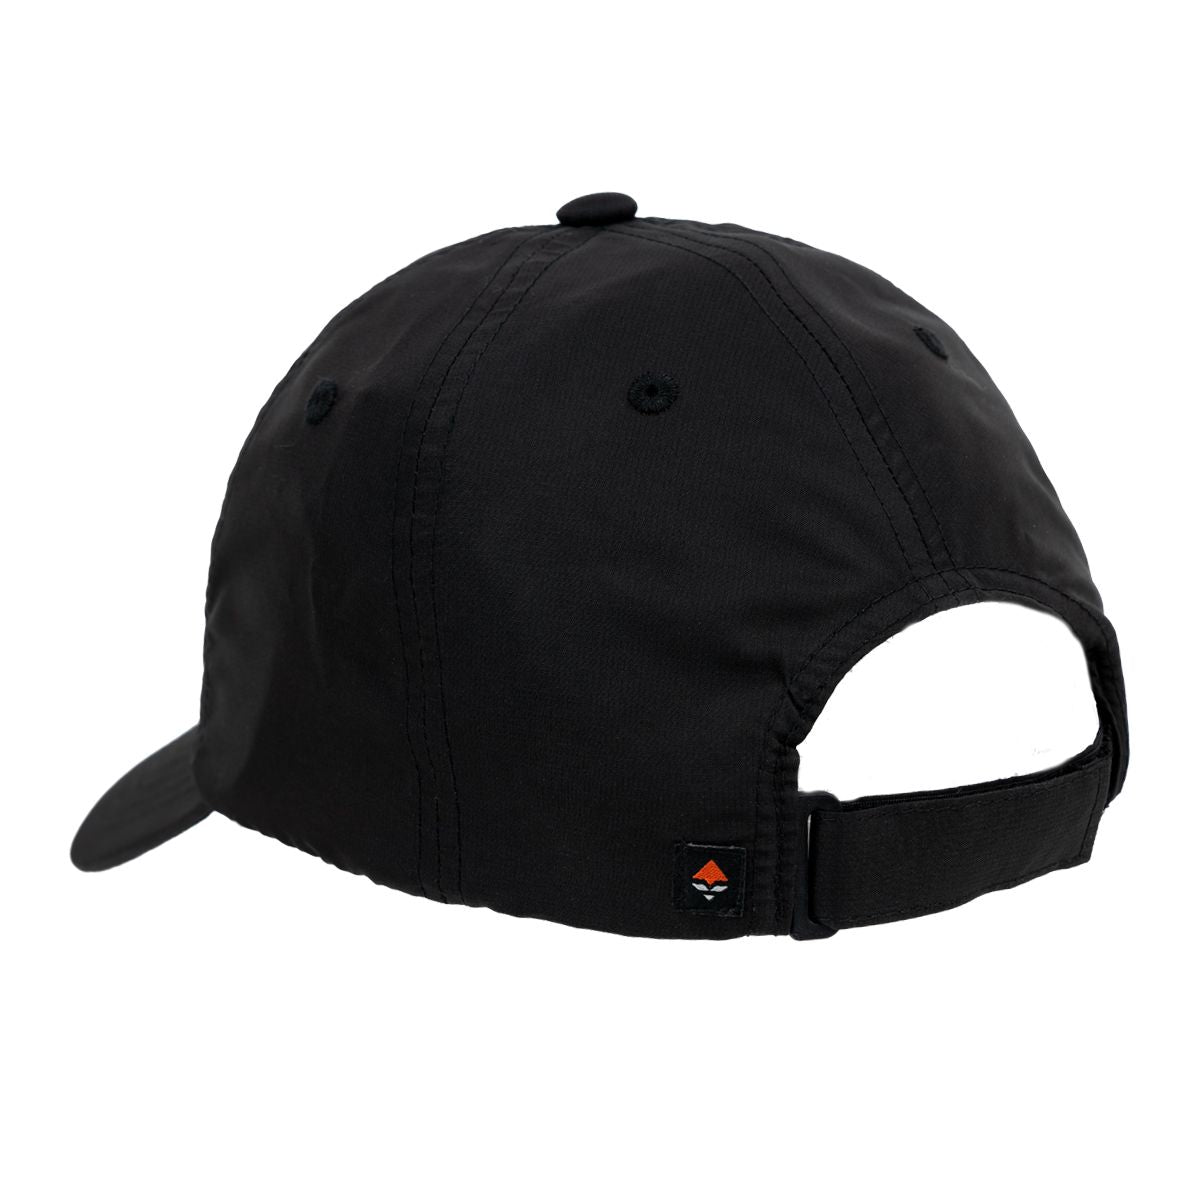 GOHUNT Topo DH Hat in Black by GOHUNT | GOHUNT - GOHUNT Shop